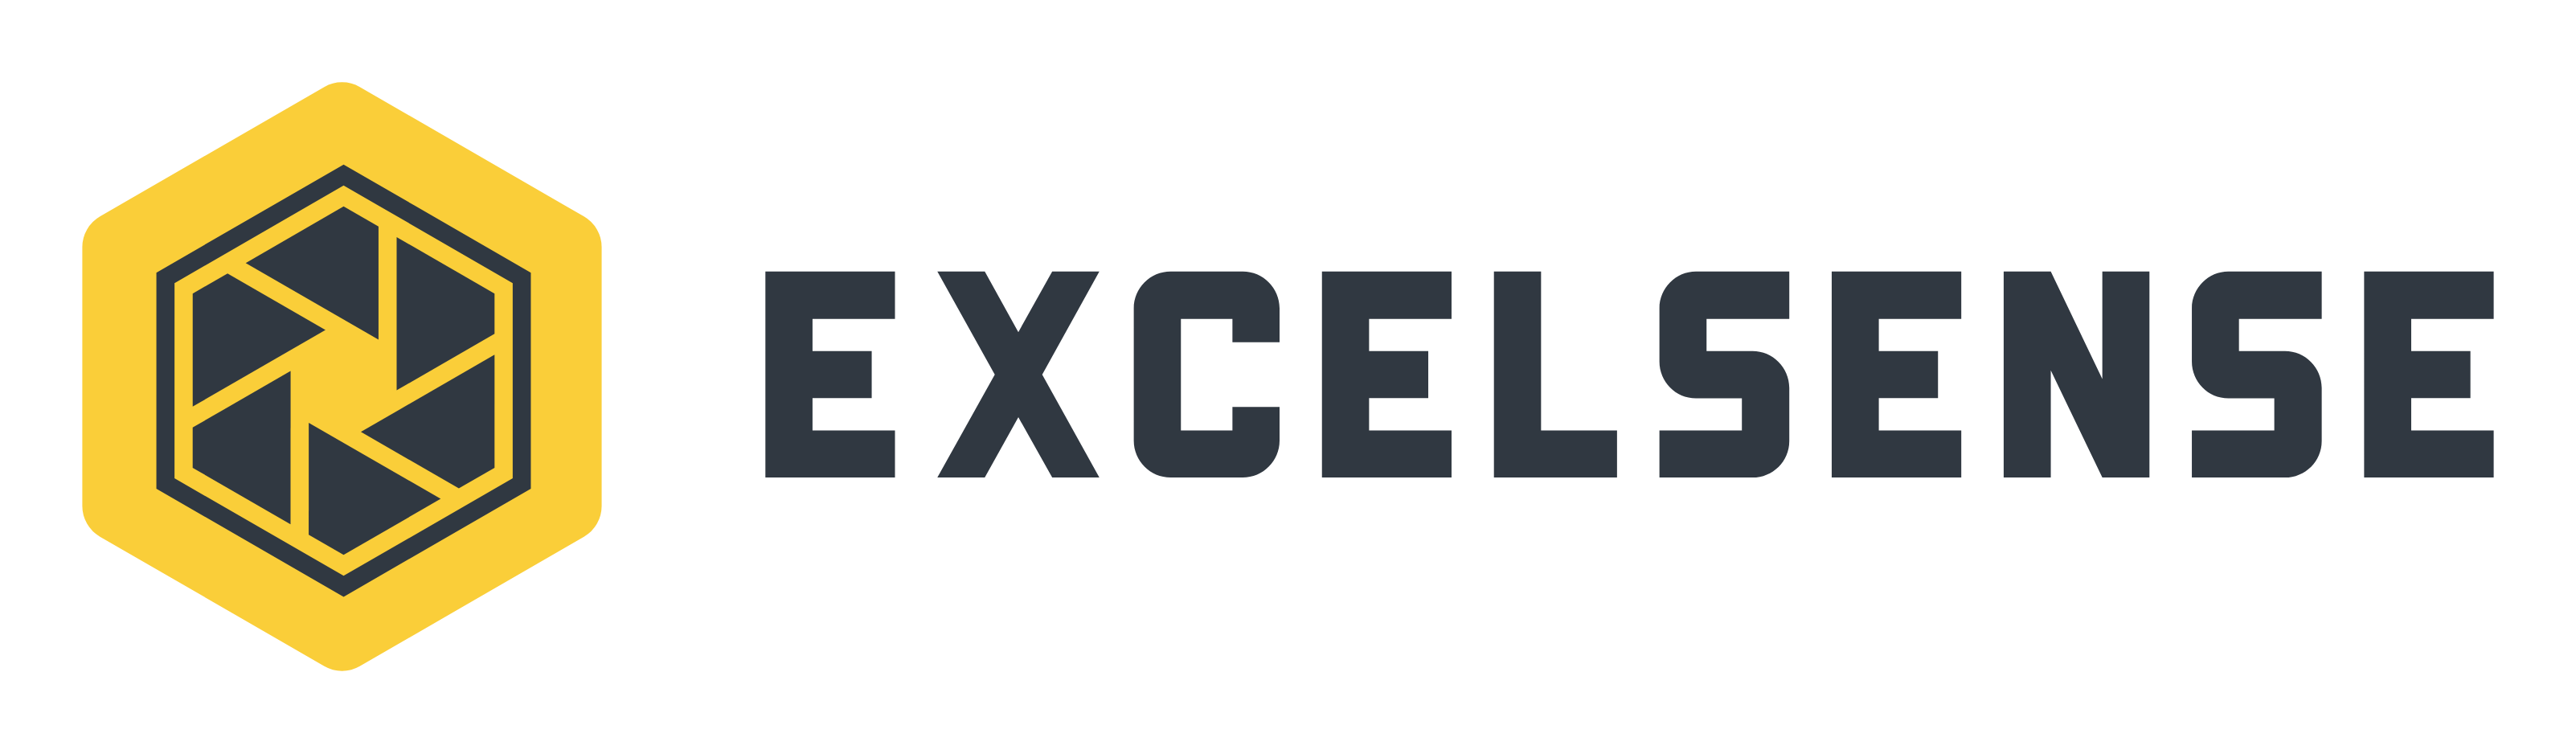 ExcelSense Technologies Corp.